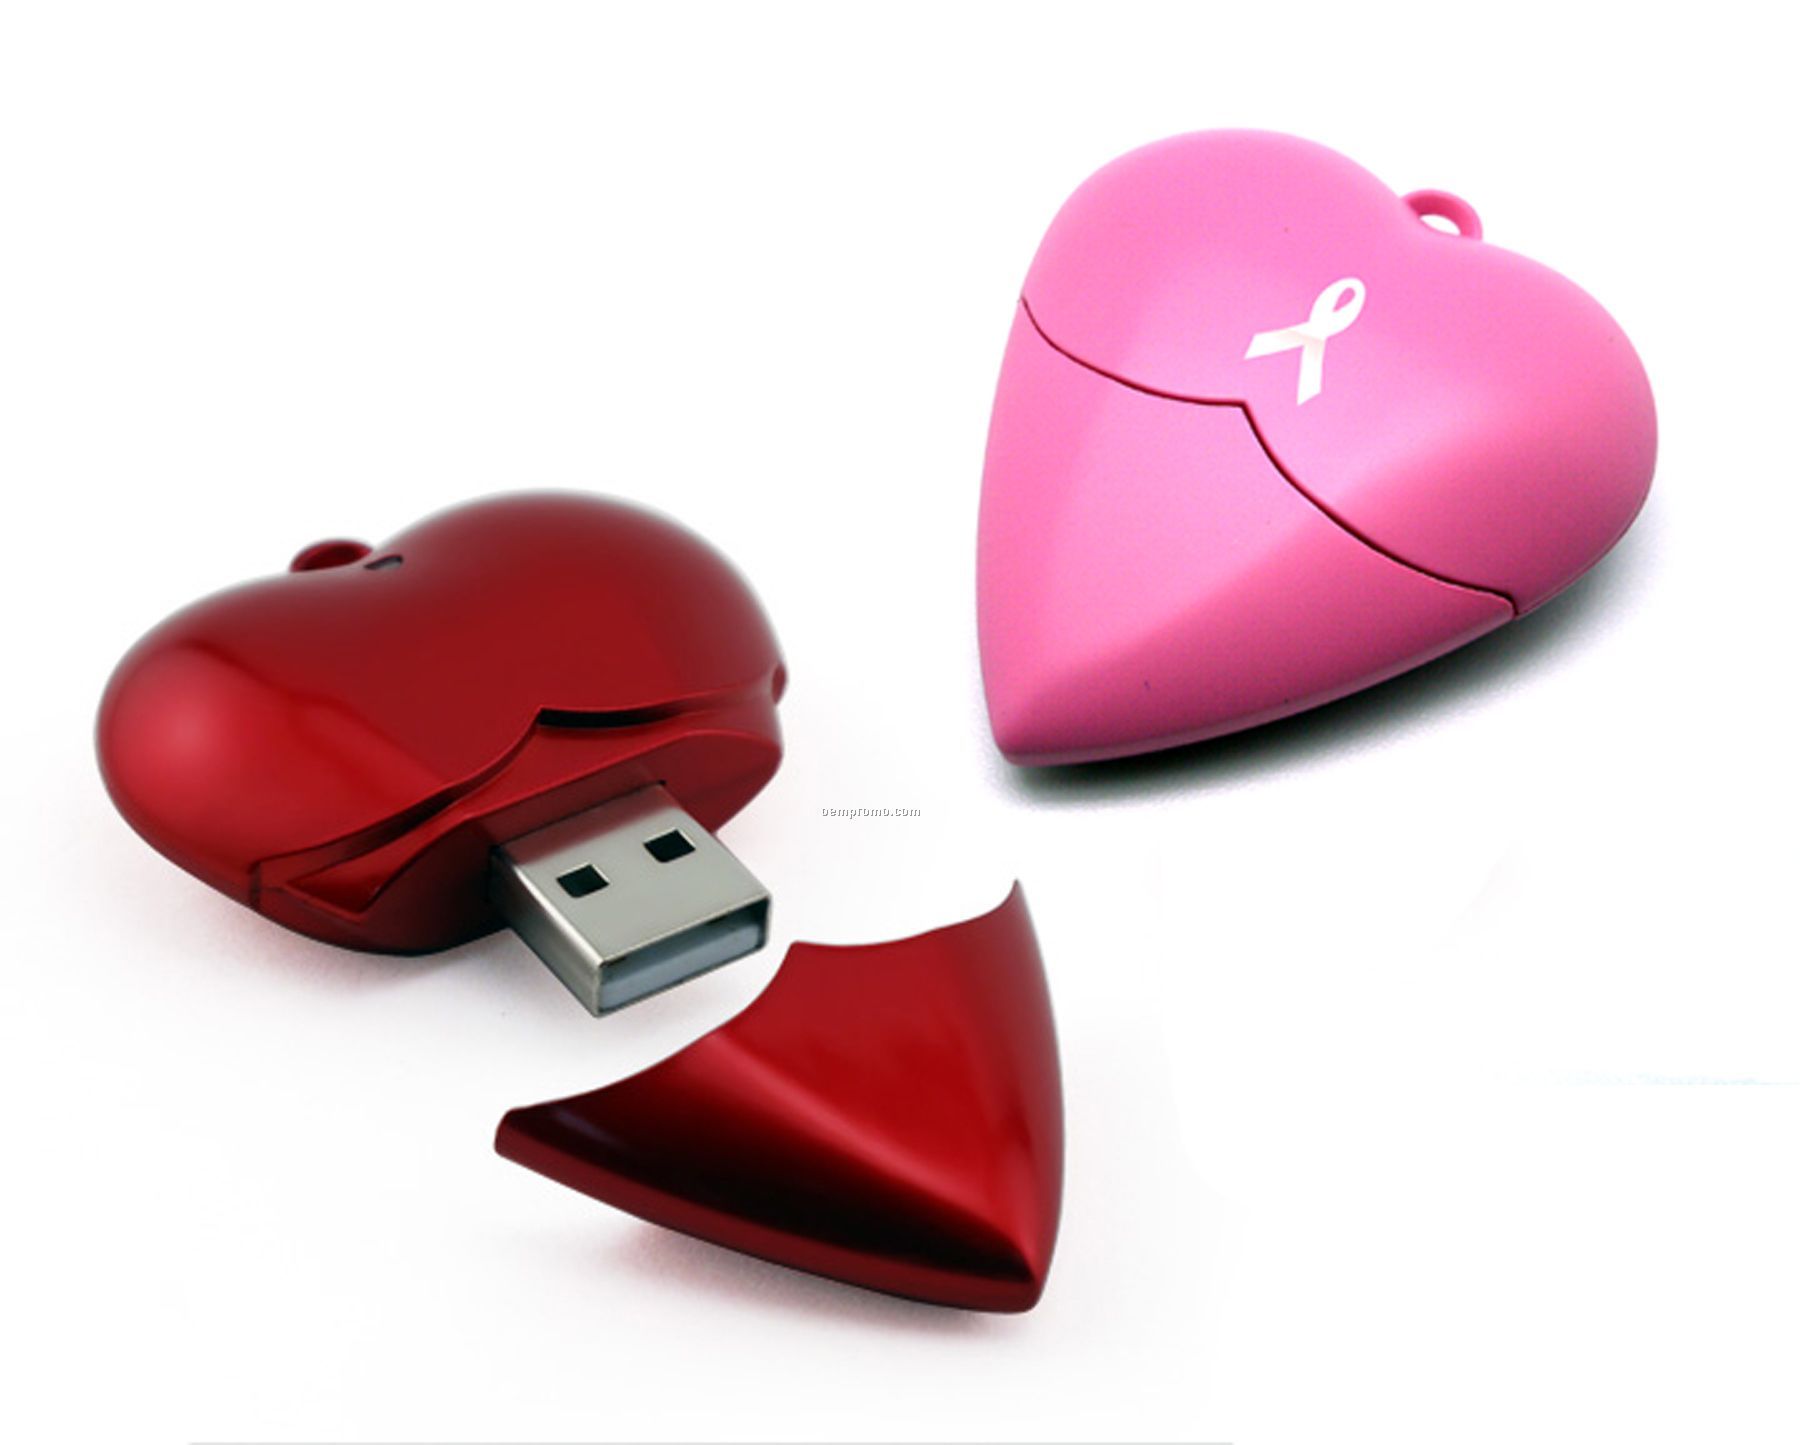 1 Gb Specialty 900r Series USB Drive - Heart